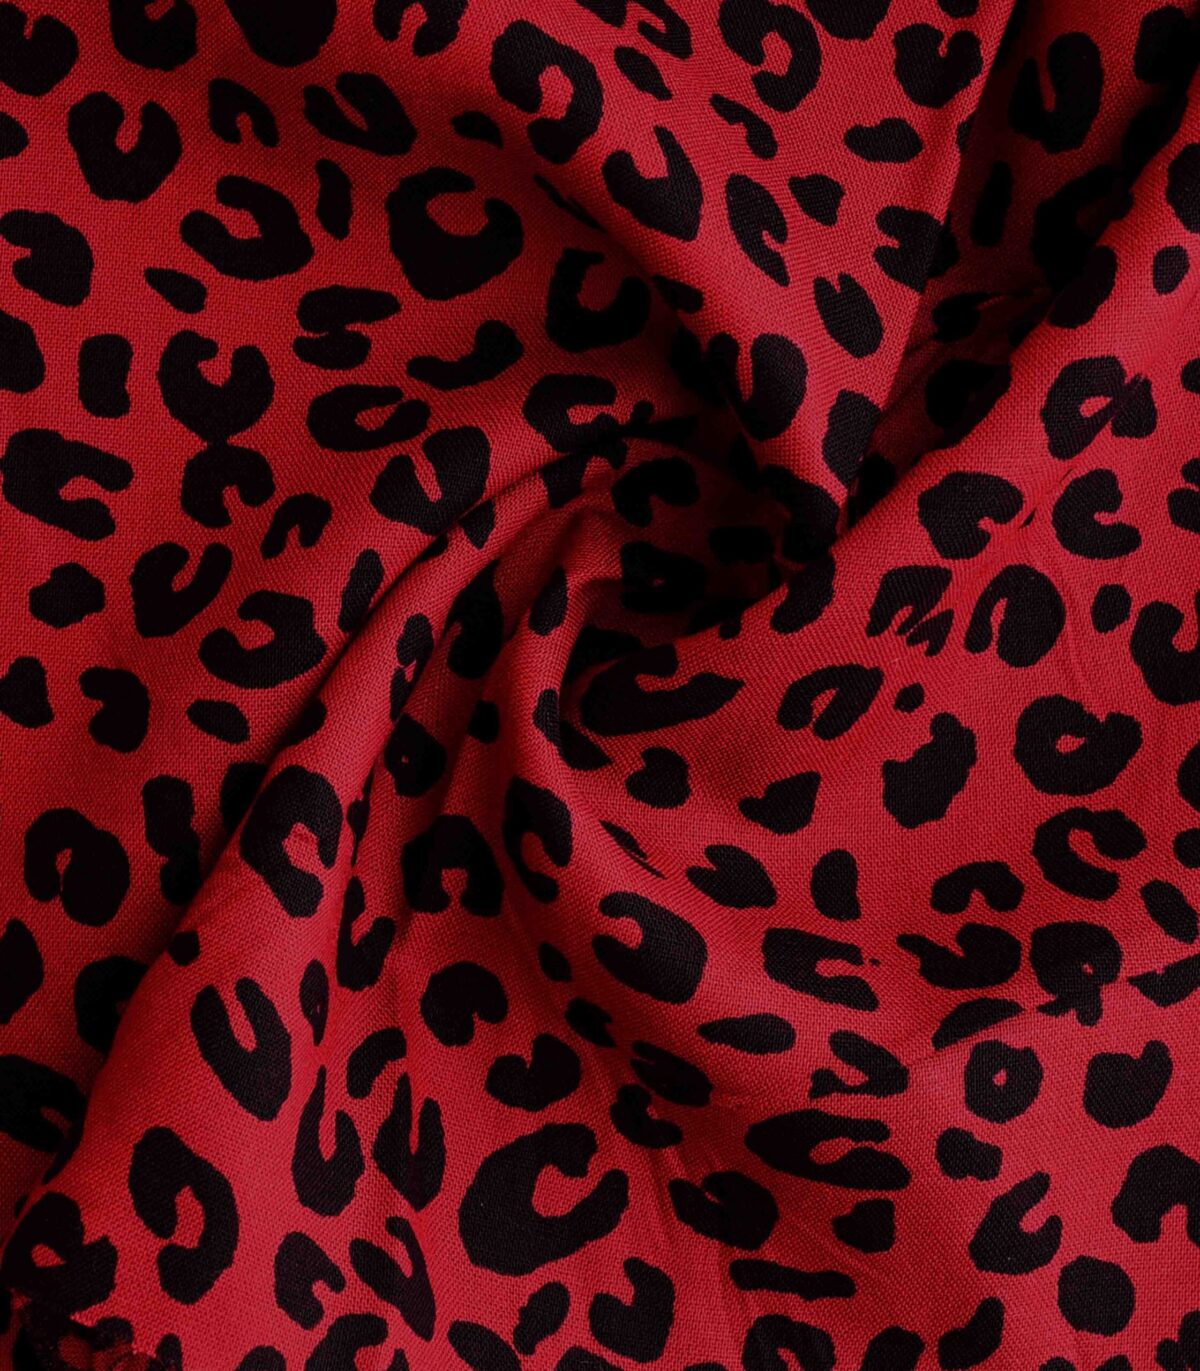 Viscose Black Leopard Animal Print Fabric